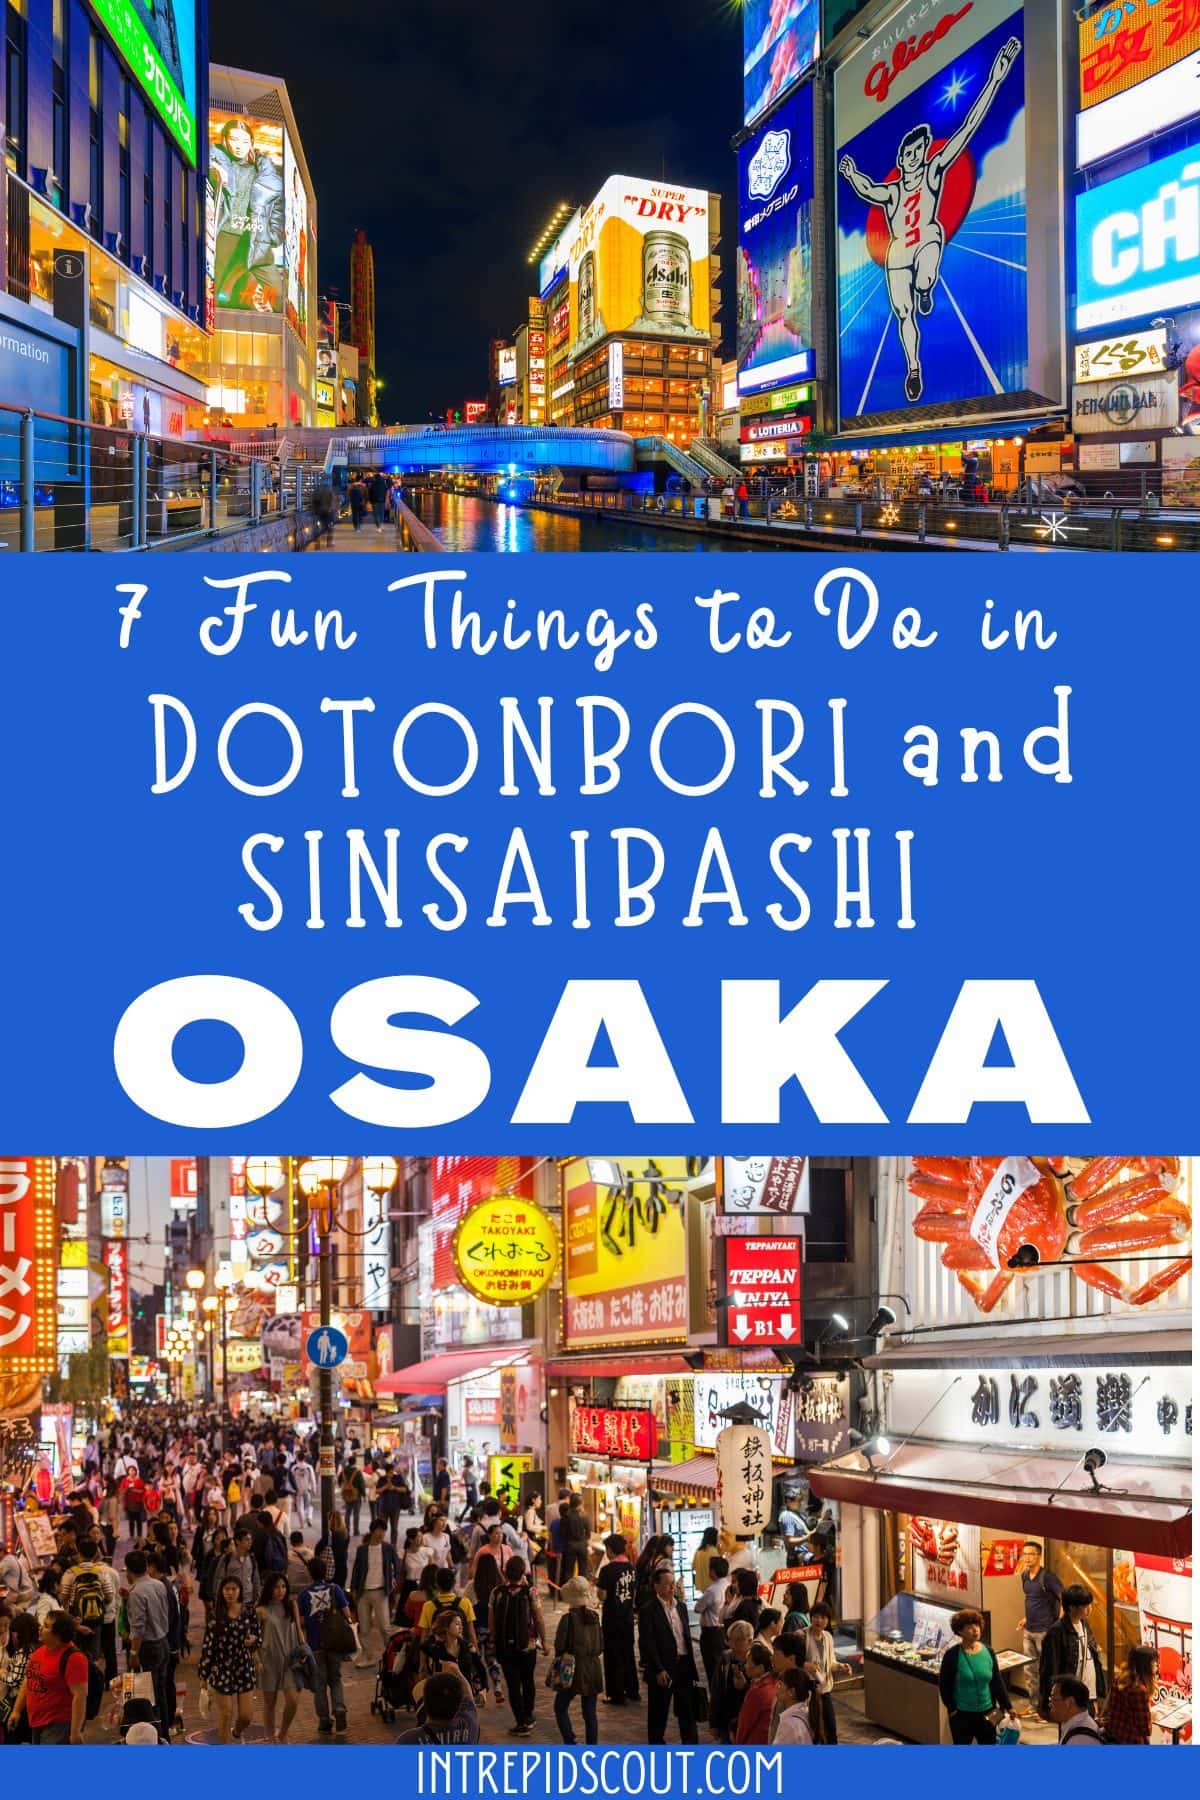 Things to Do in Dotonbori and Shinsaibashi